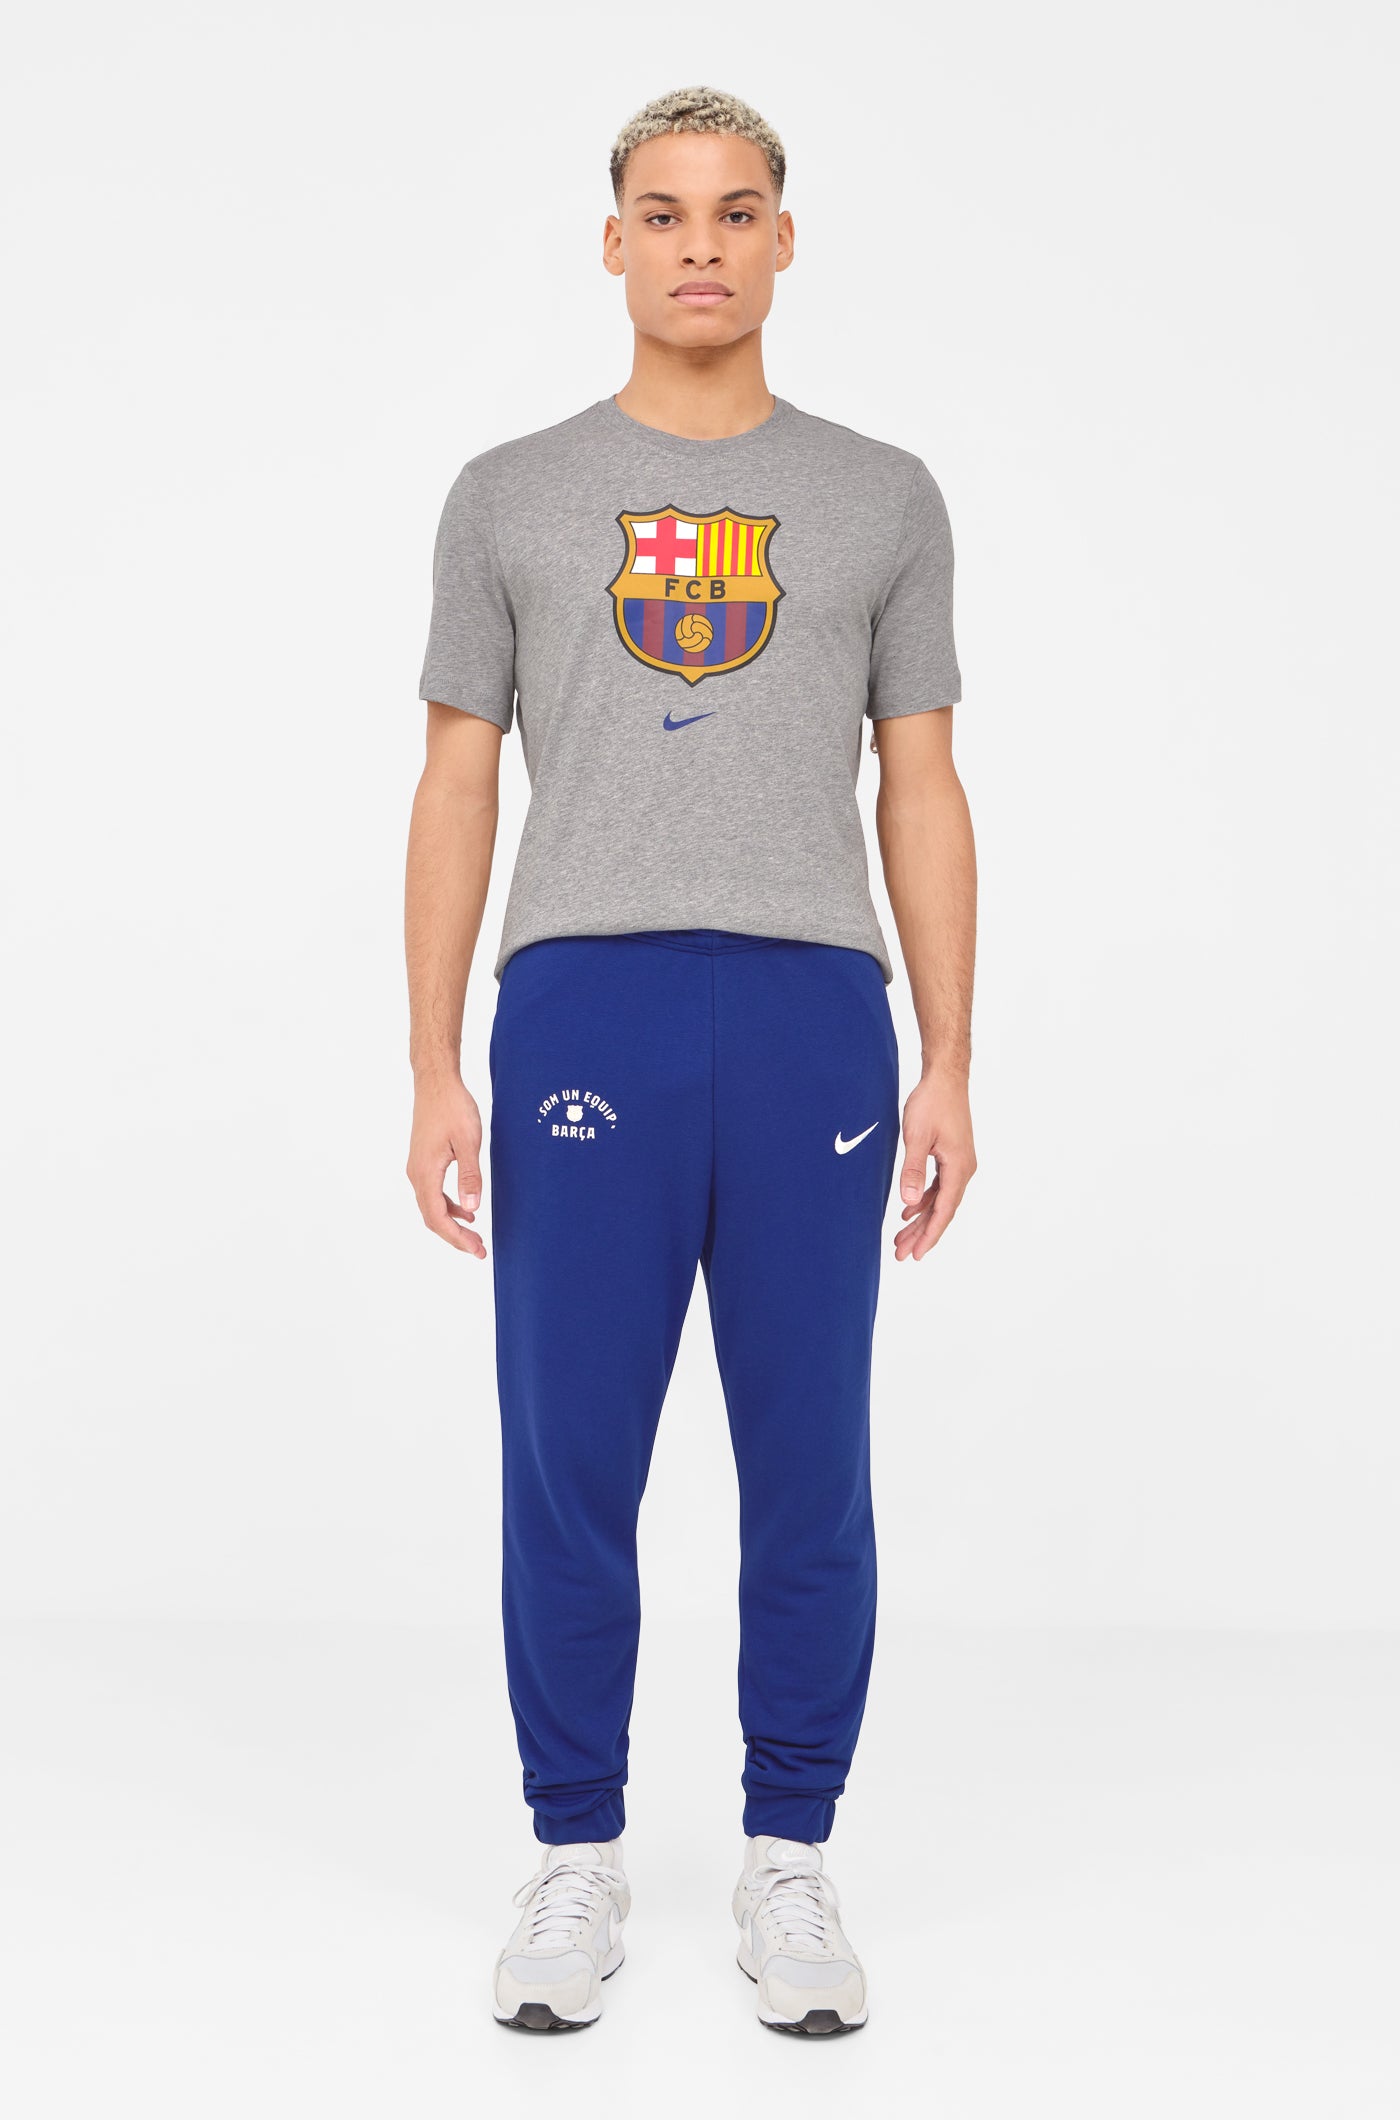 Pantalon som un equip Barça Nike